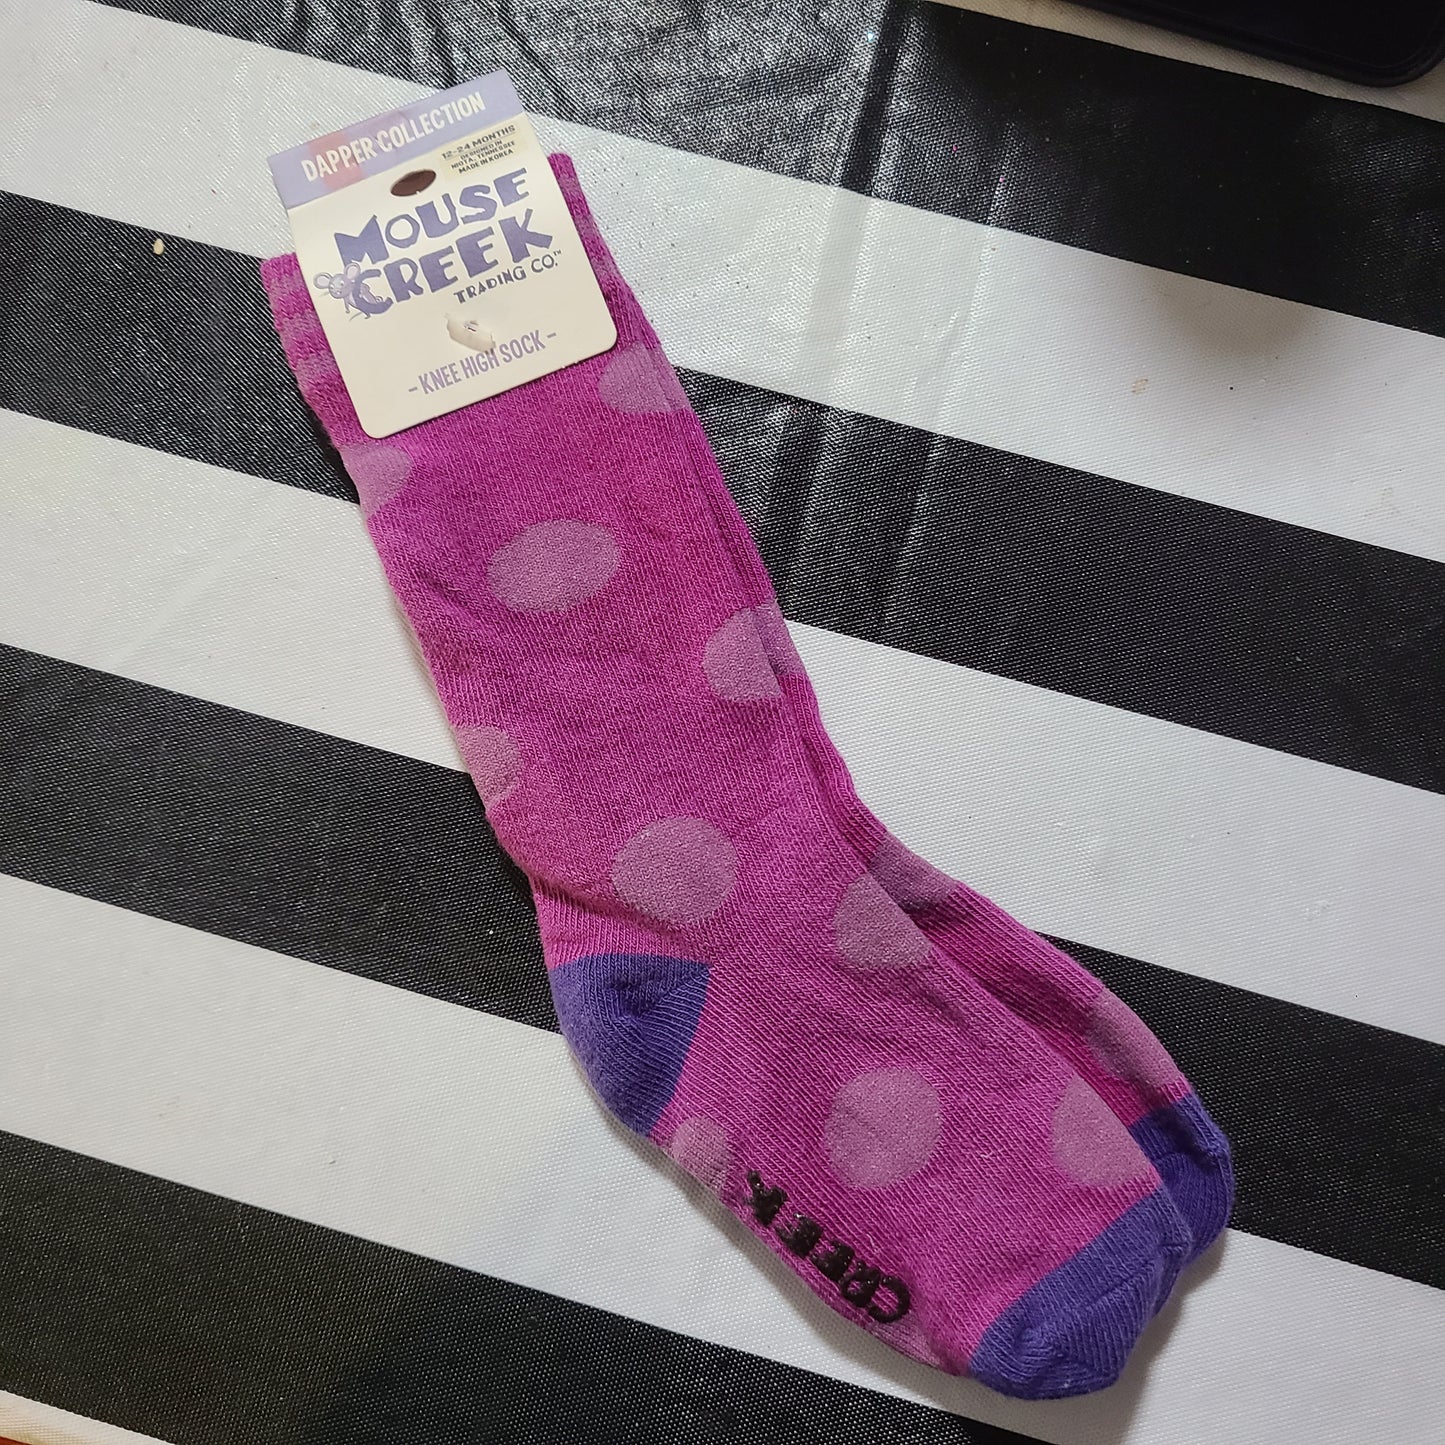 Mouse Creek Socks